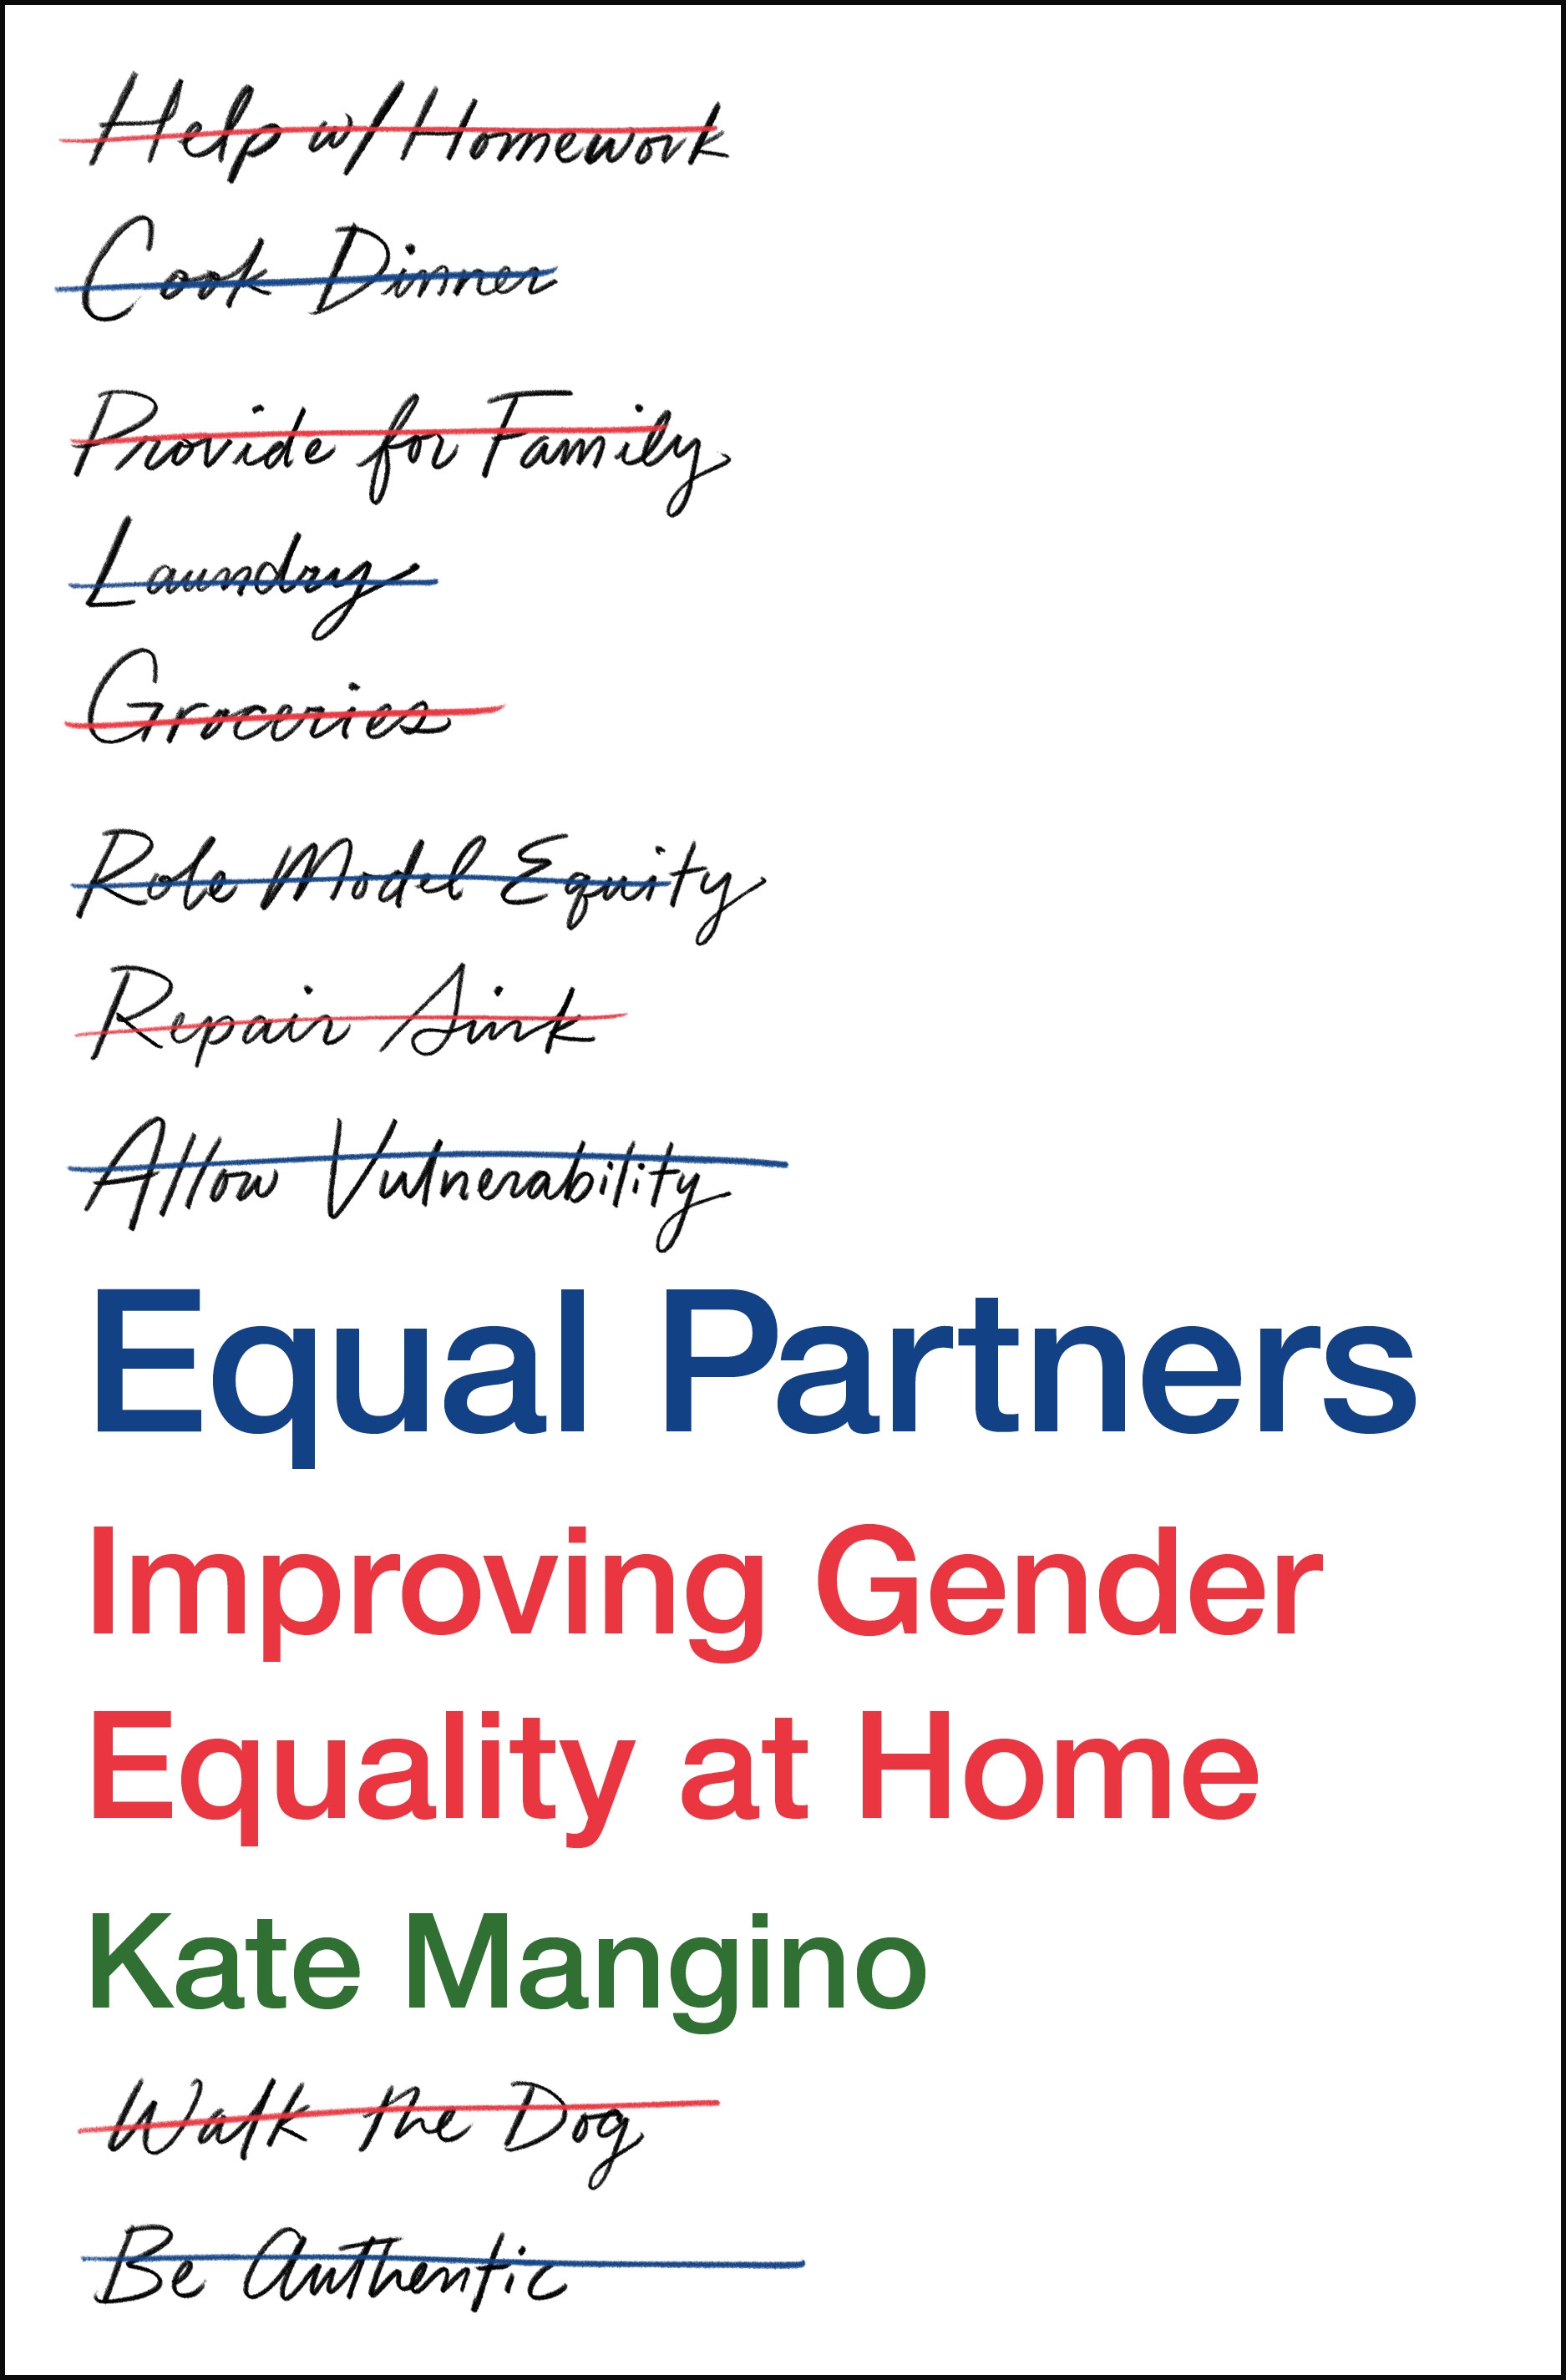 Equal Partners Improving Gender Equality at Home